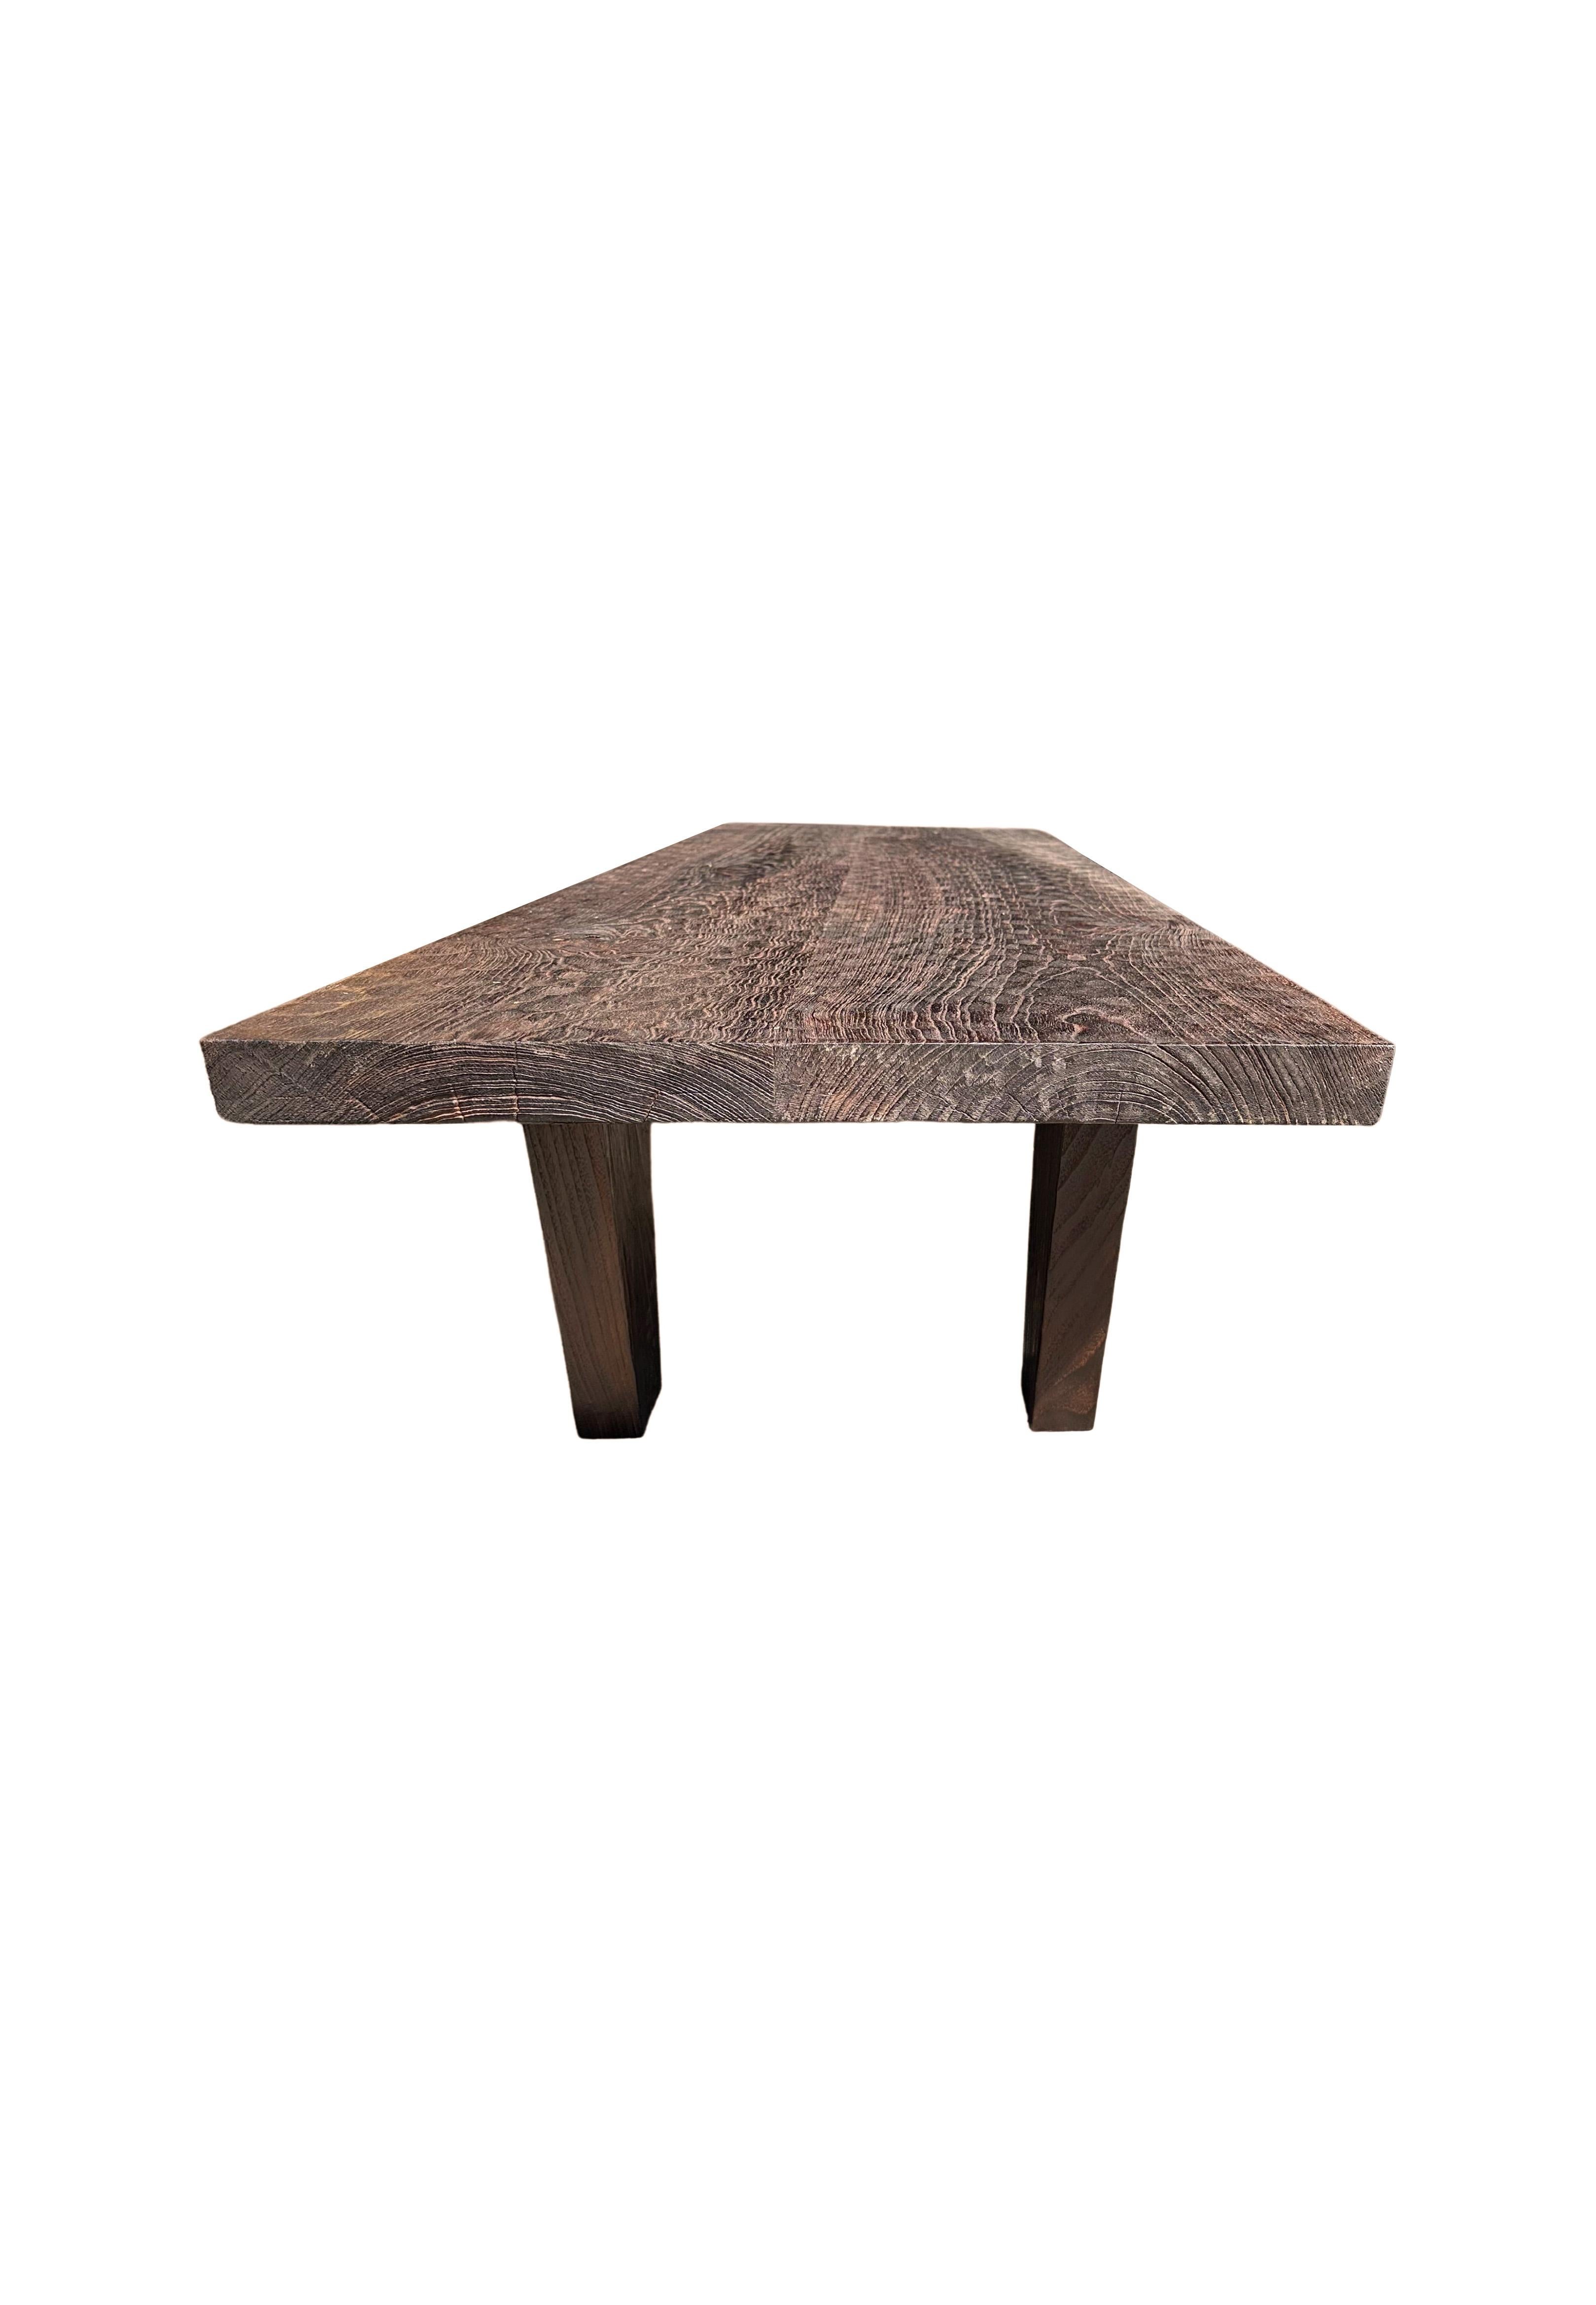 Suar Wood Table Hand-Hewn Detailing Espresso Finish, Modern Organic For Sale 4